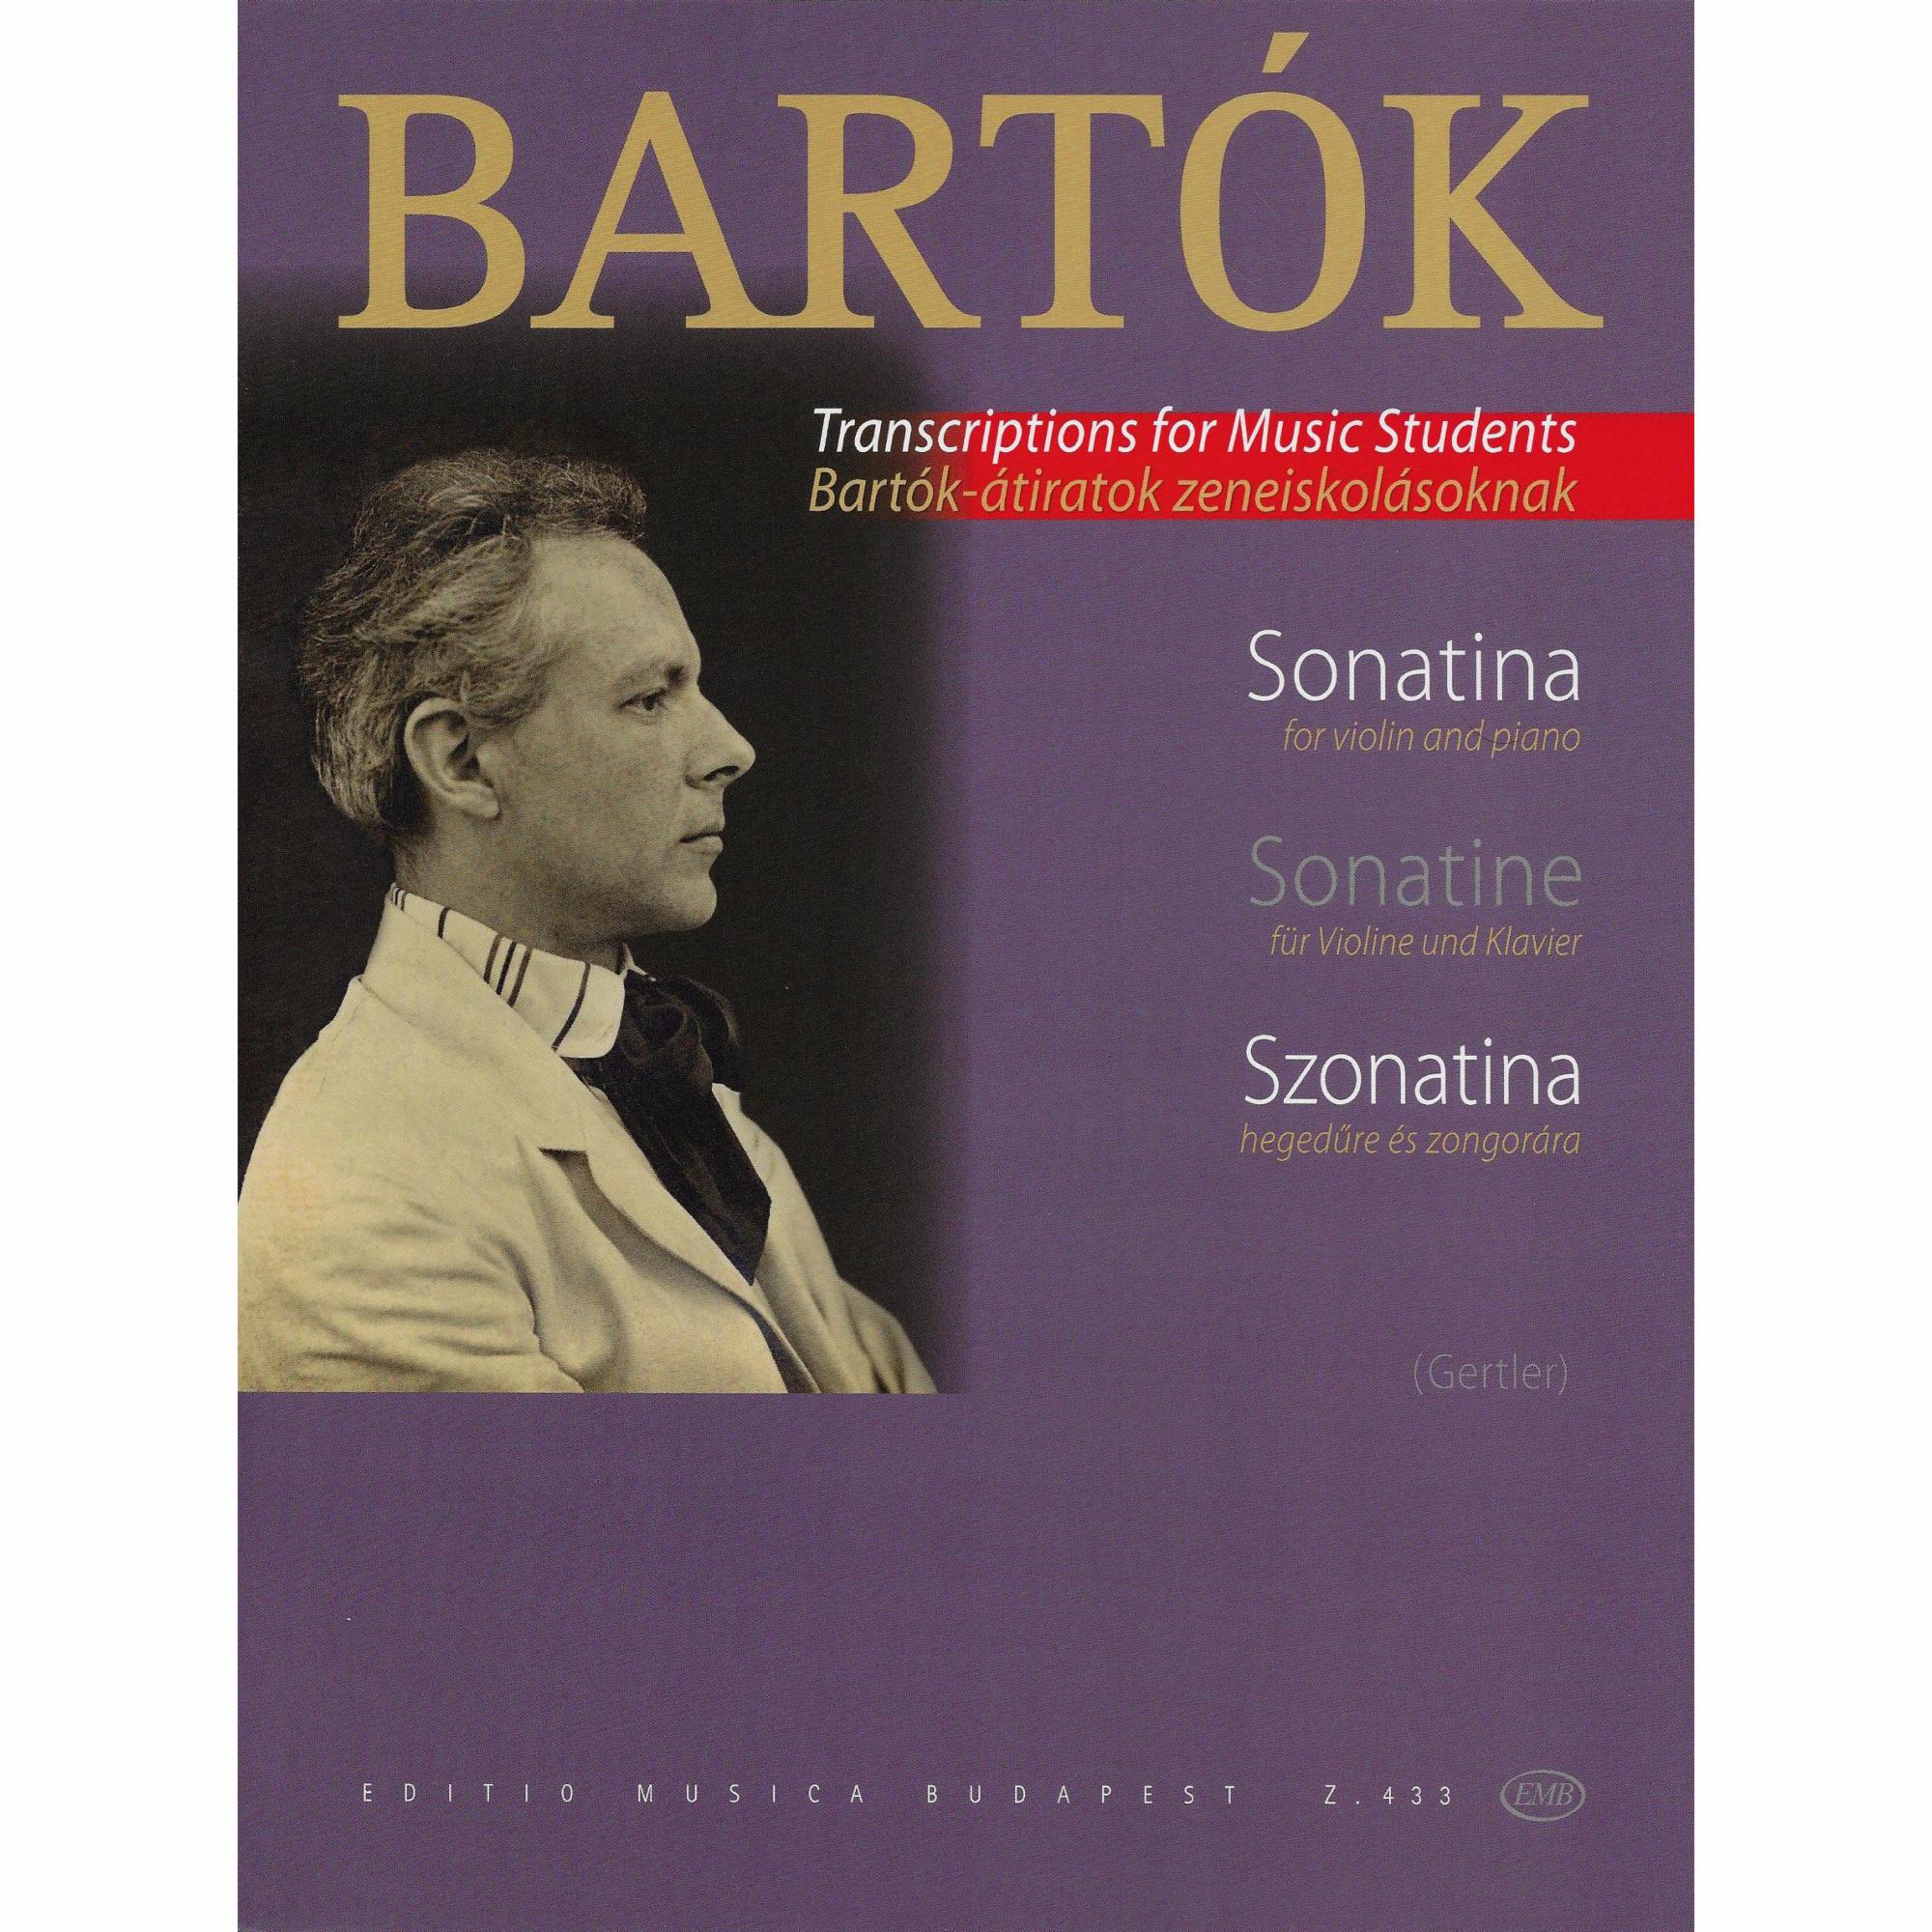 Bartok -- Sonatina for Violin and Piano